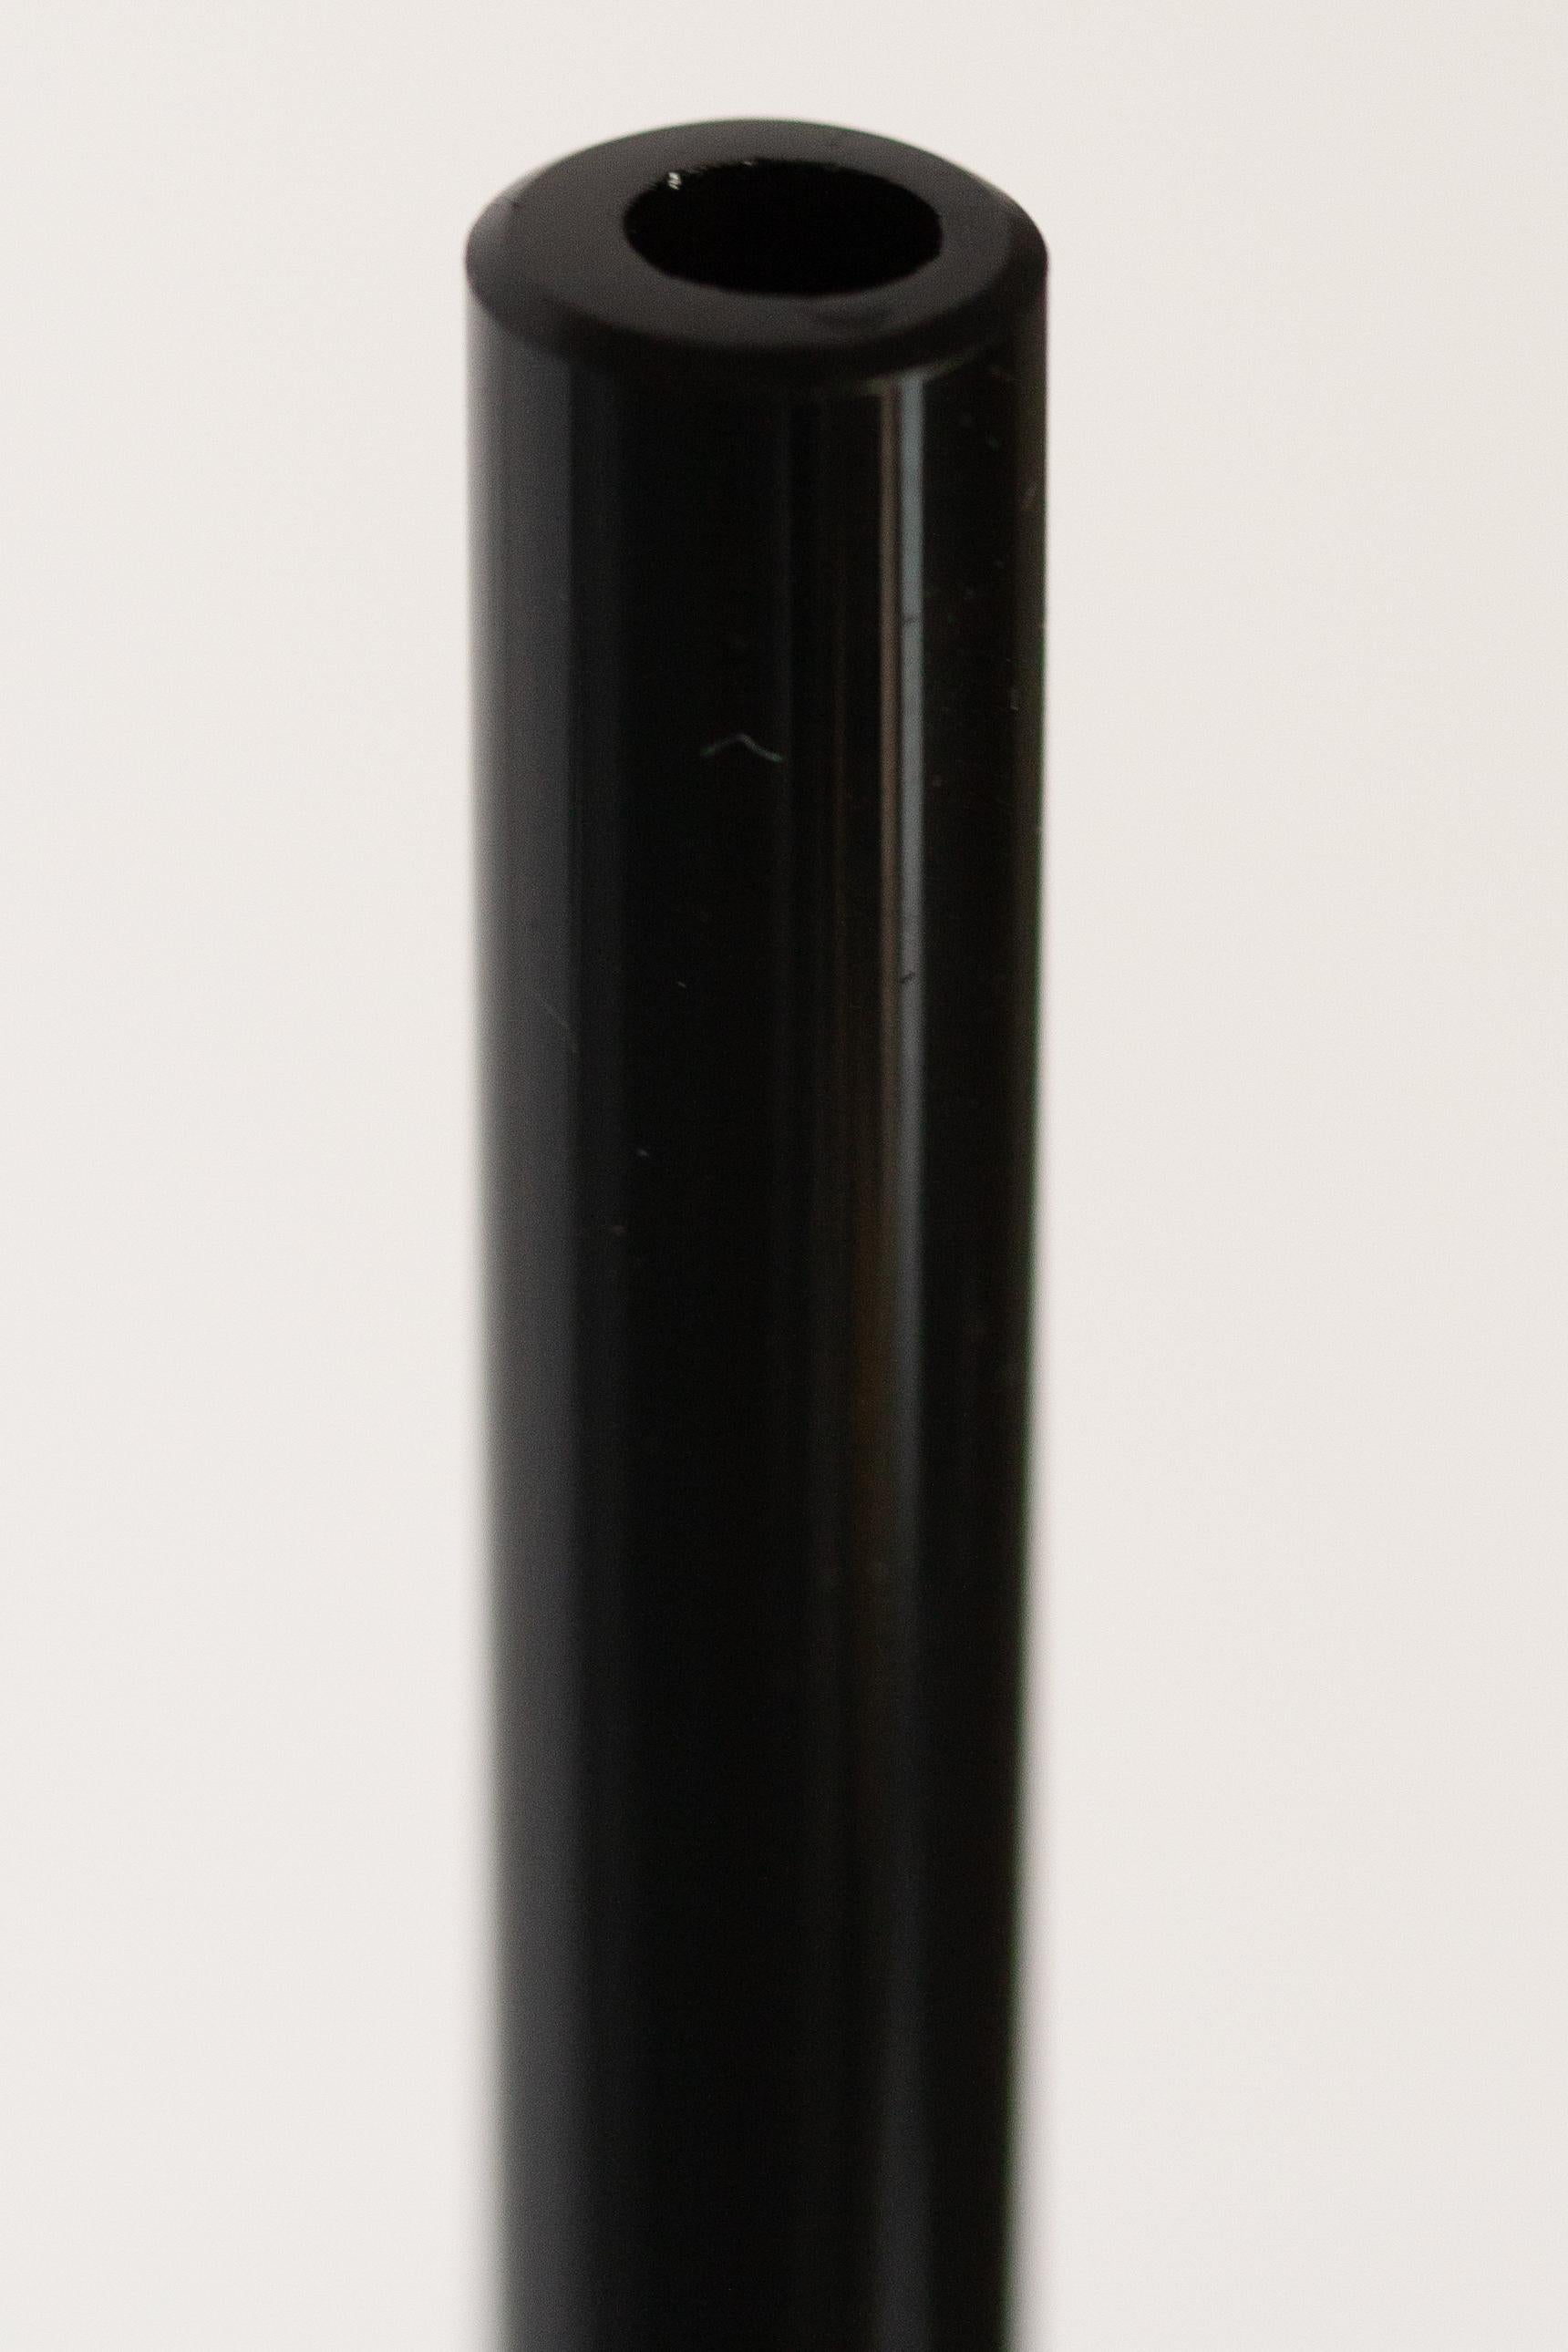 Mid Century Vintage Slim Black Decorative Glass Vase, Europe, 1960s For Sale 5